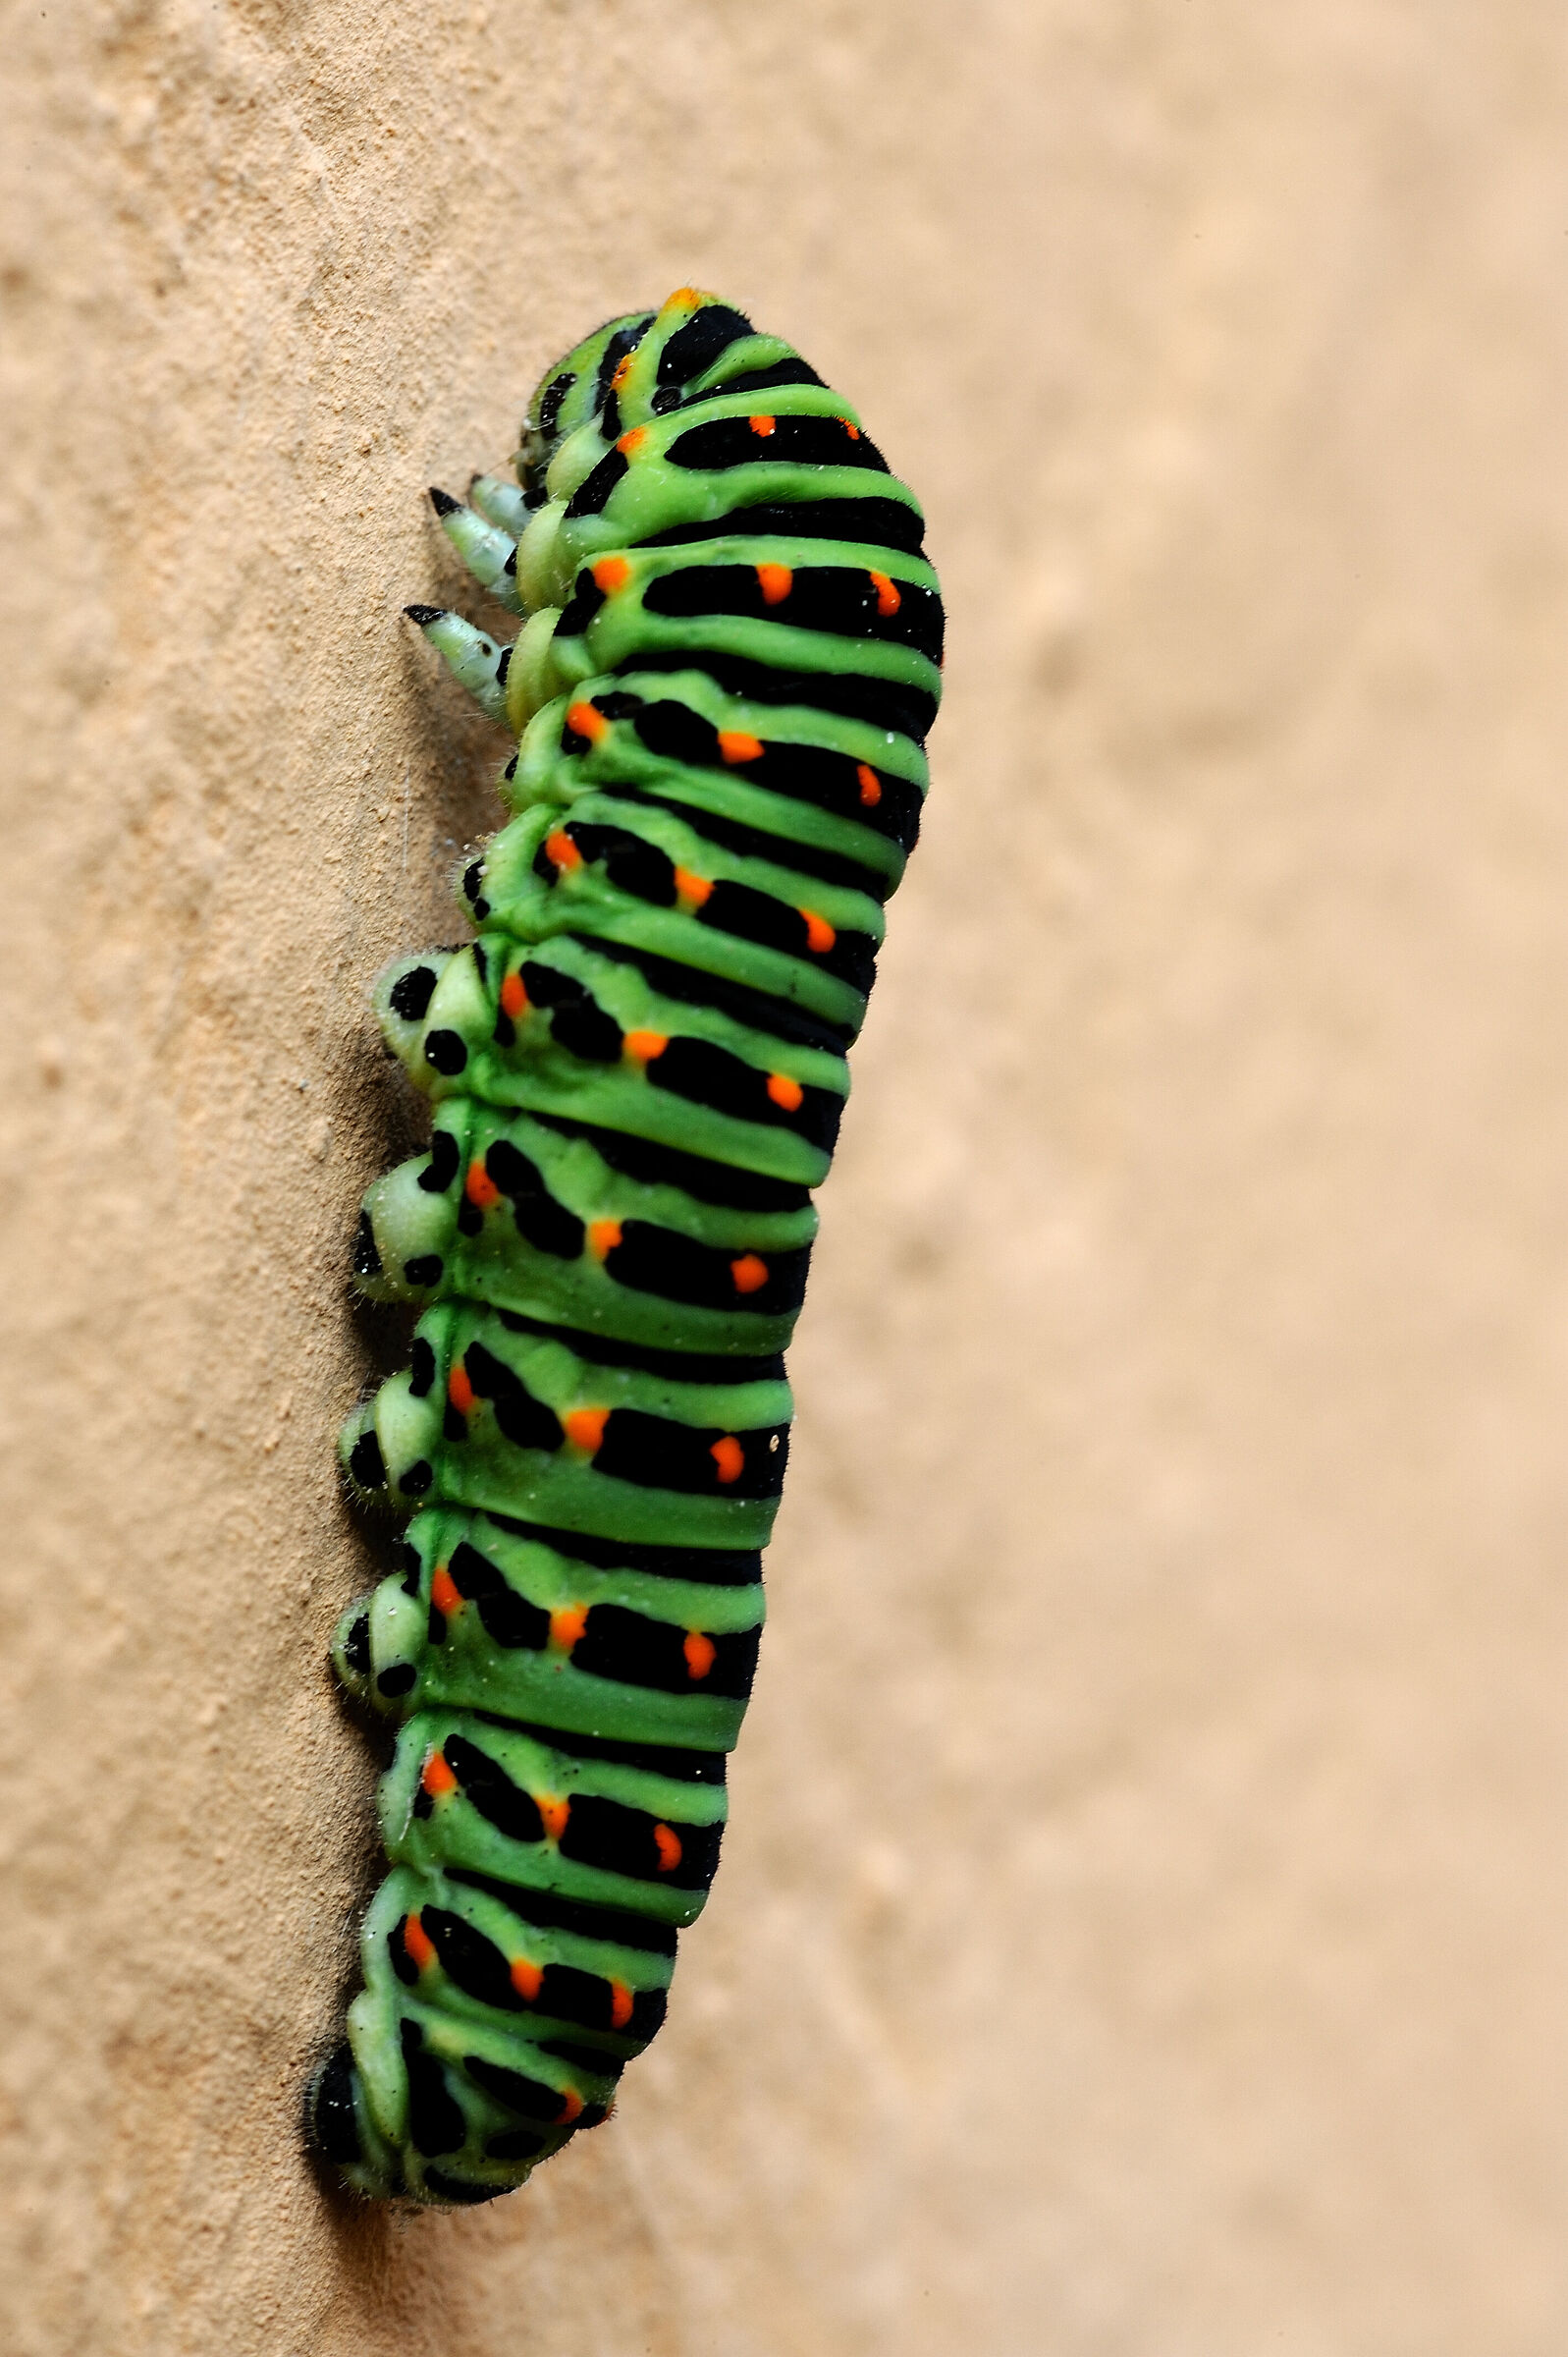 Macaone butterfly caterpillar...